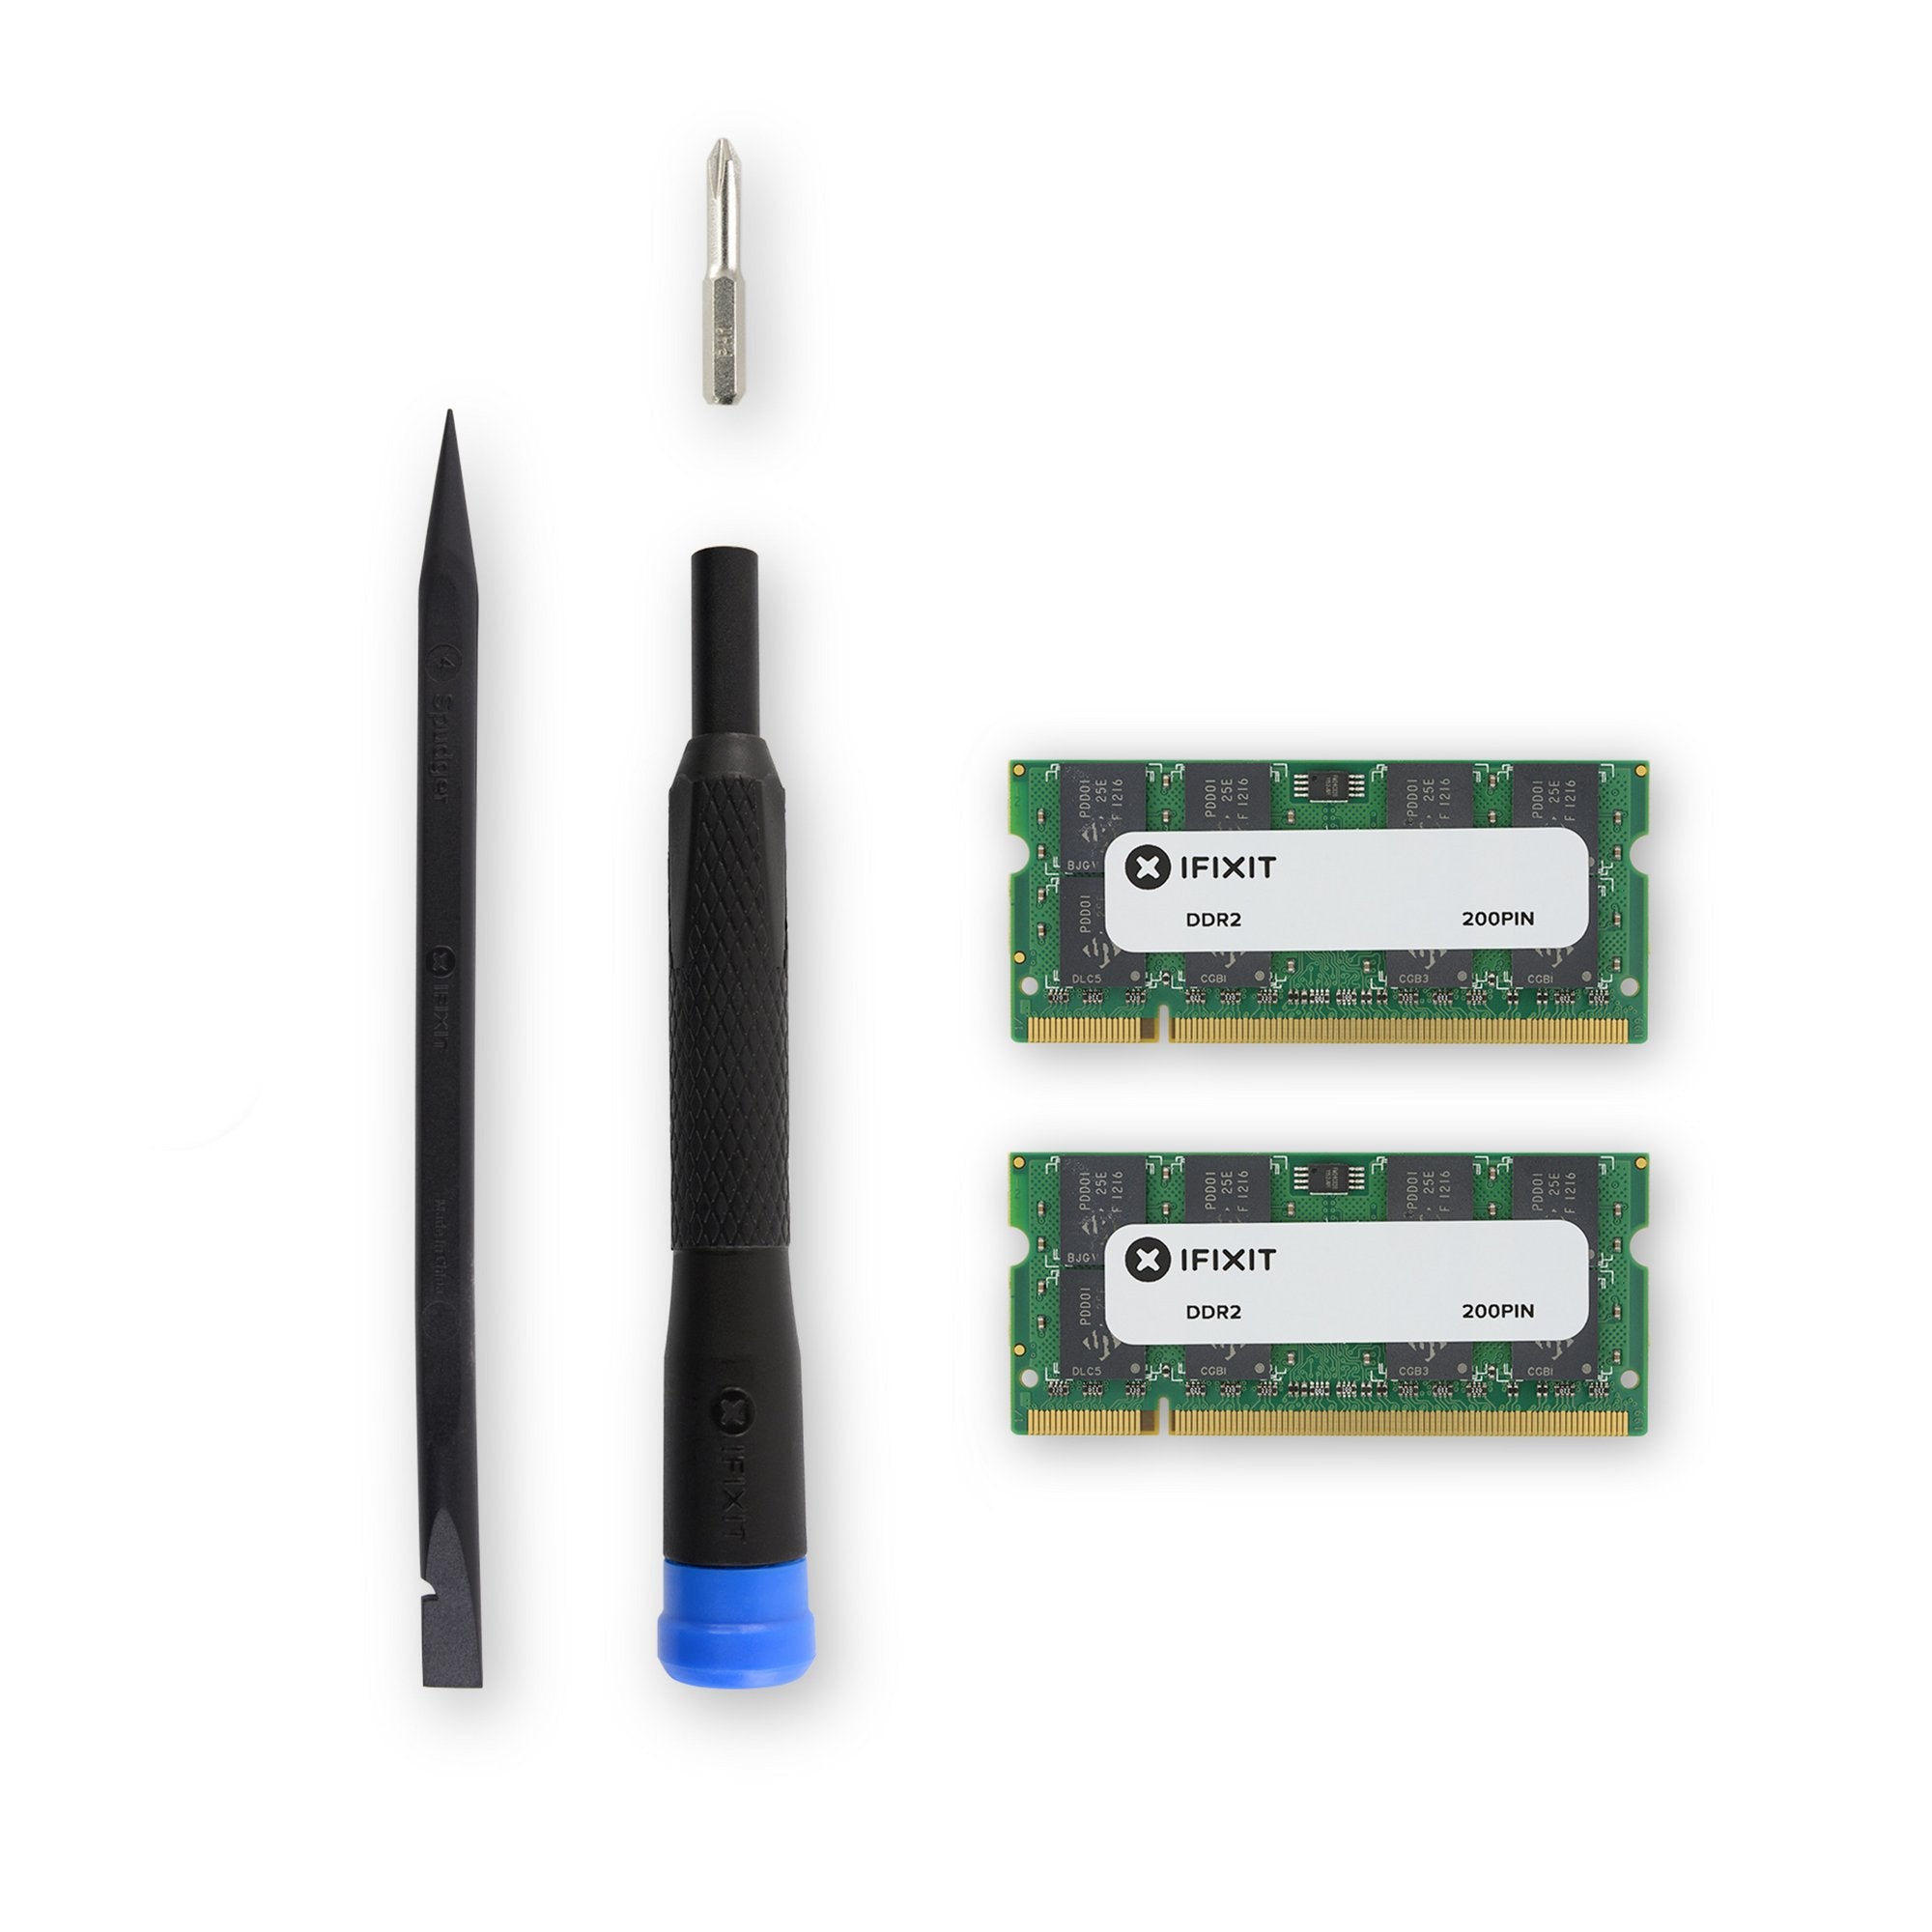 iMac Intel 17" EMC 2114 (Late 2006) Memory Maxxer RAM Upgrade Kit